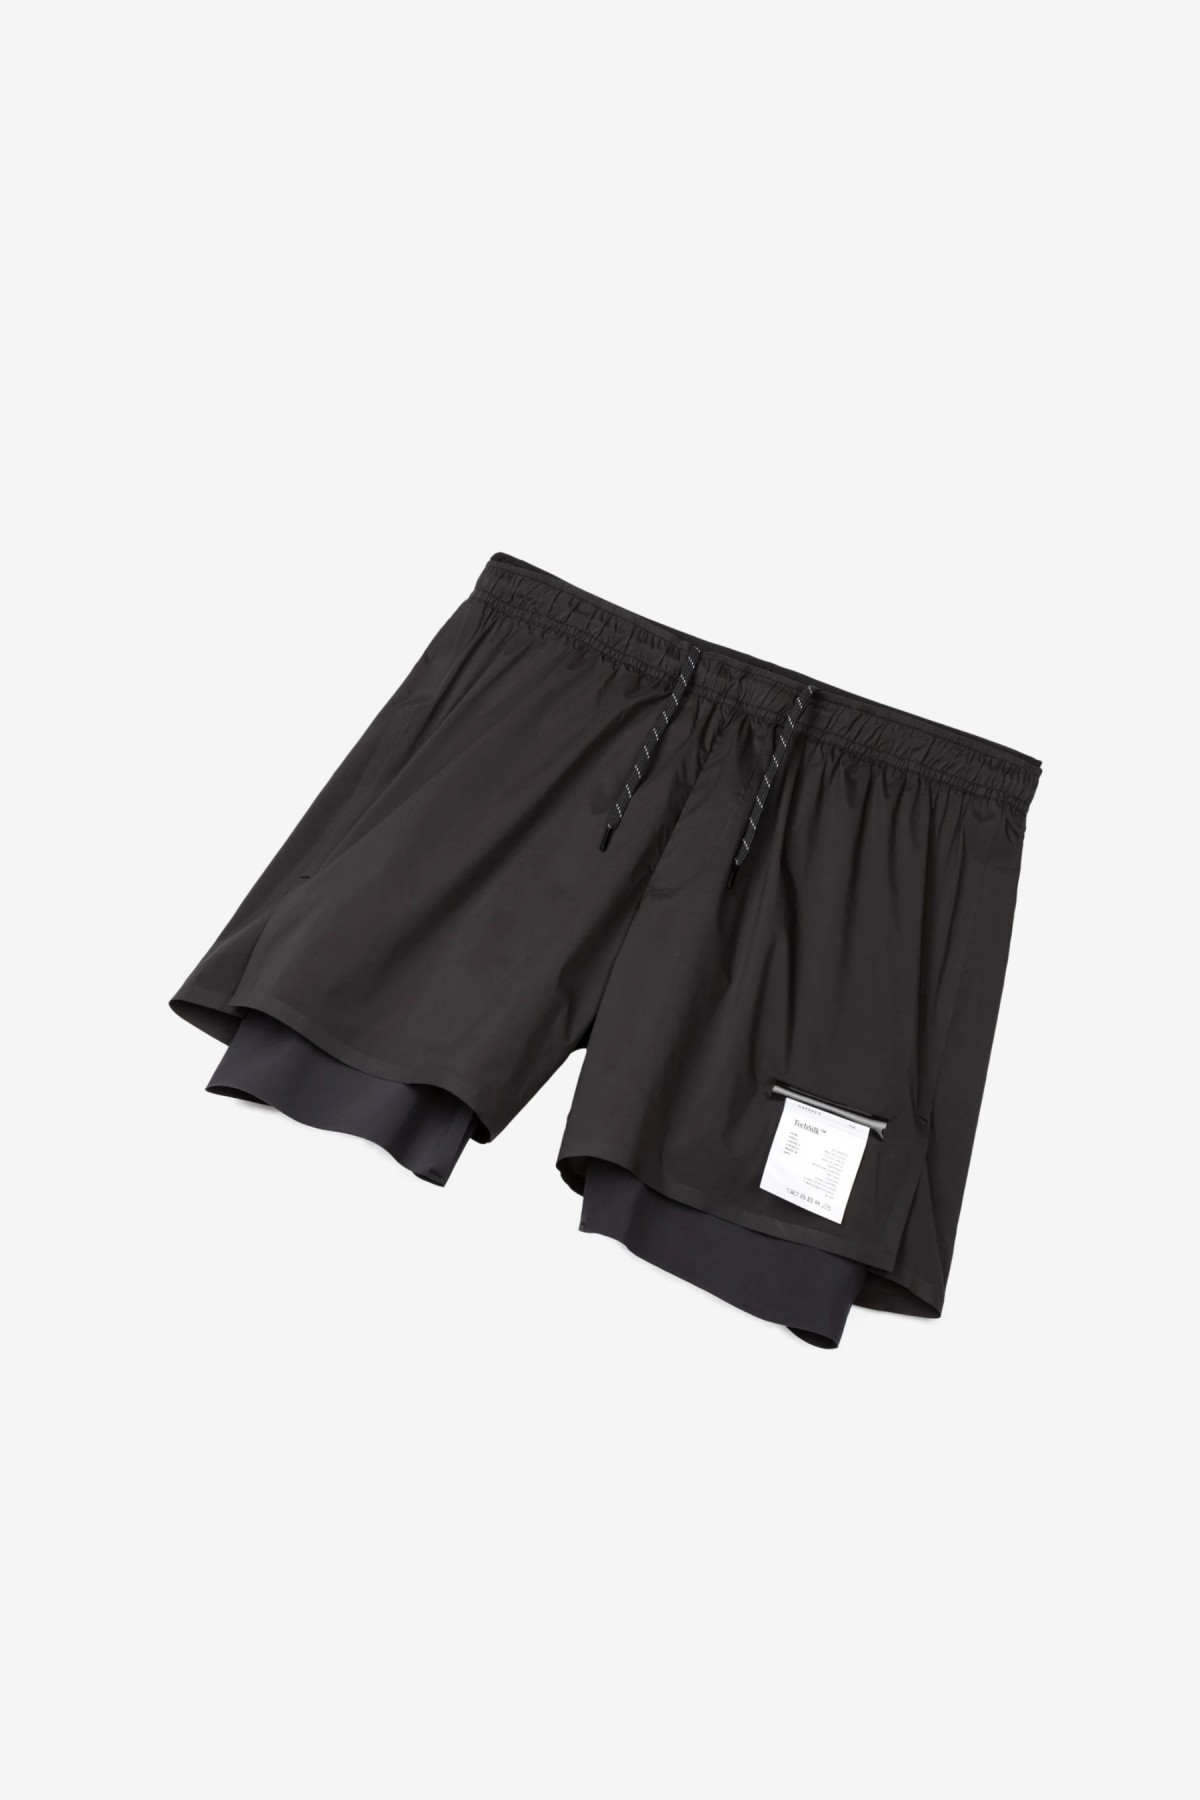 Satisfy Running TechSilk 8" Shorts in Black